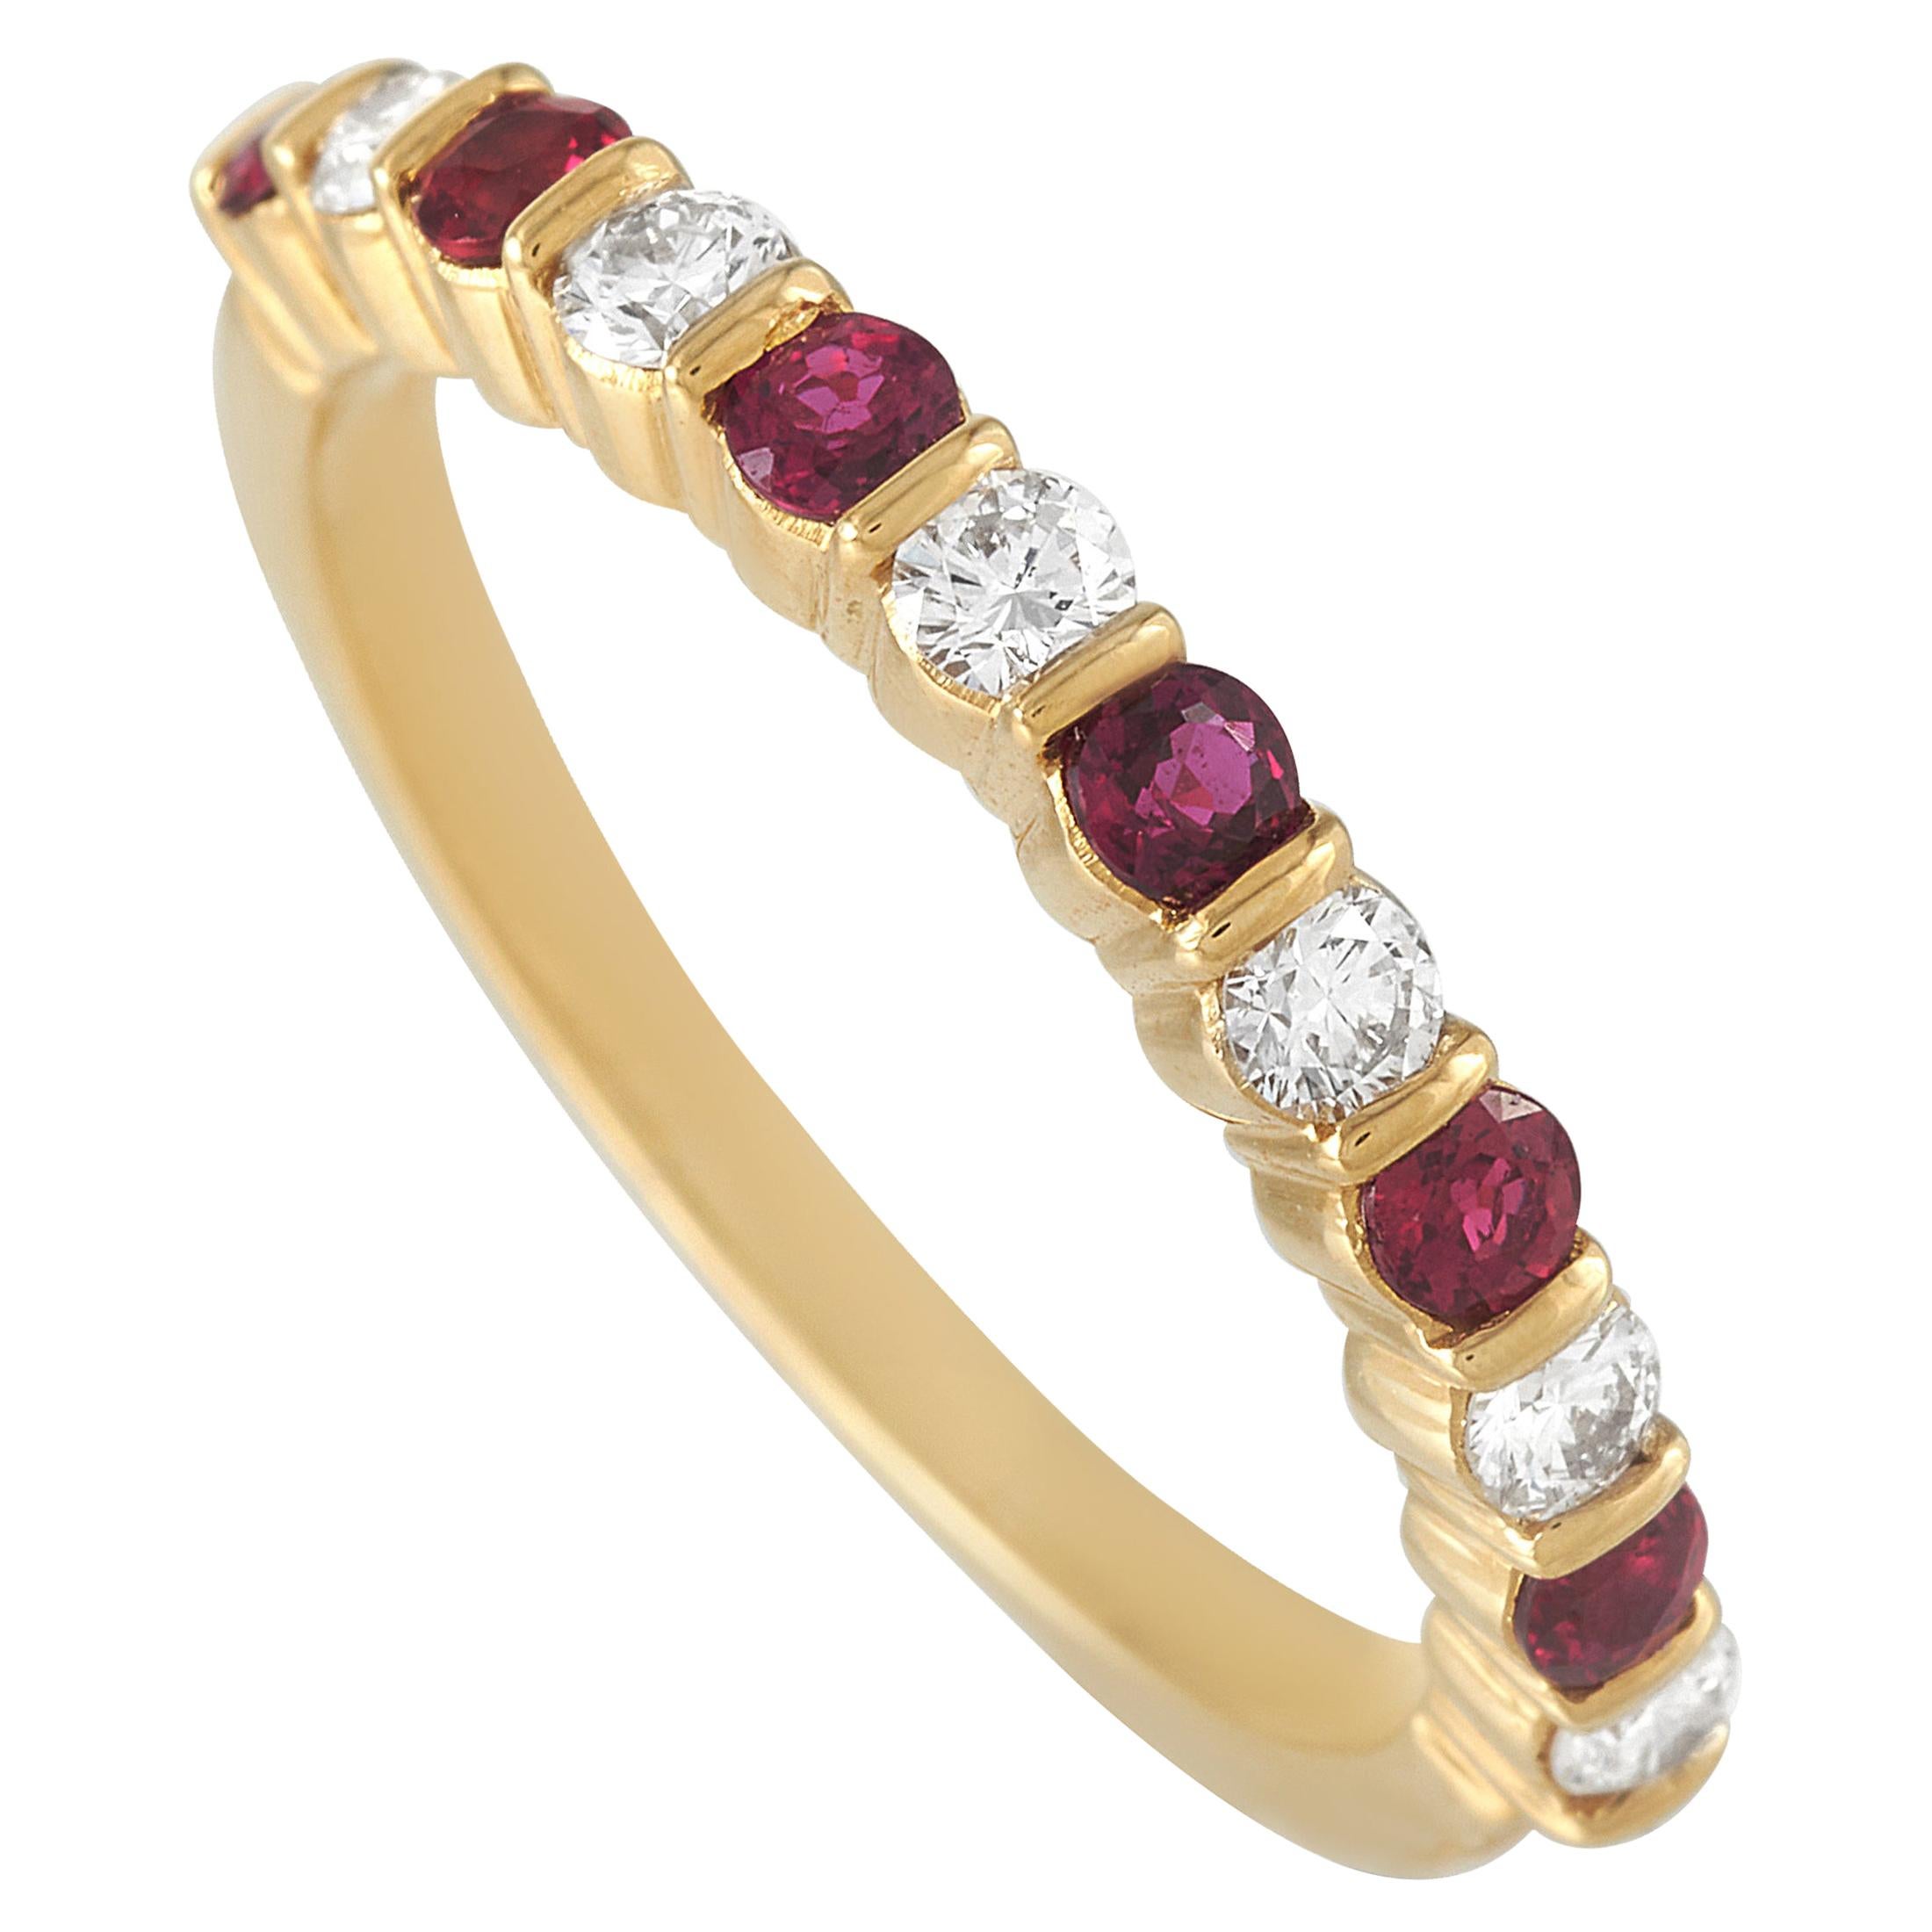 Tiffany & Co. 18 Karat Gold 0.20 Carat Diamond and 0.20 Carat Ruby Band Ring